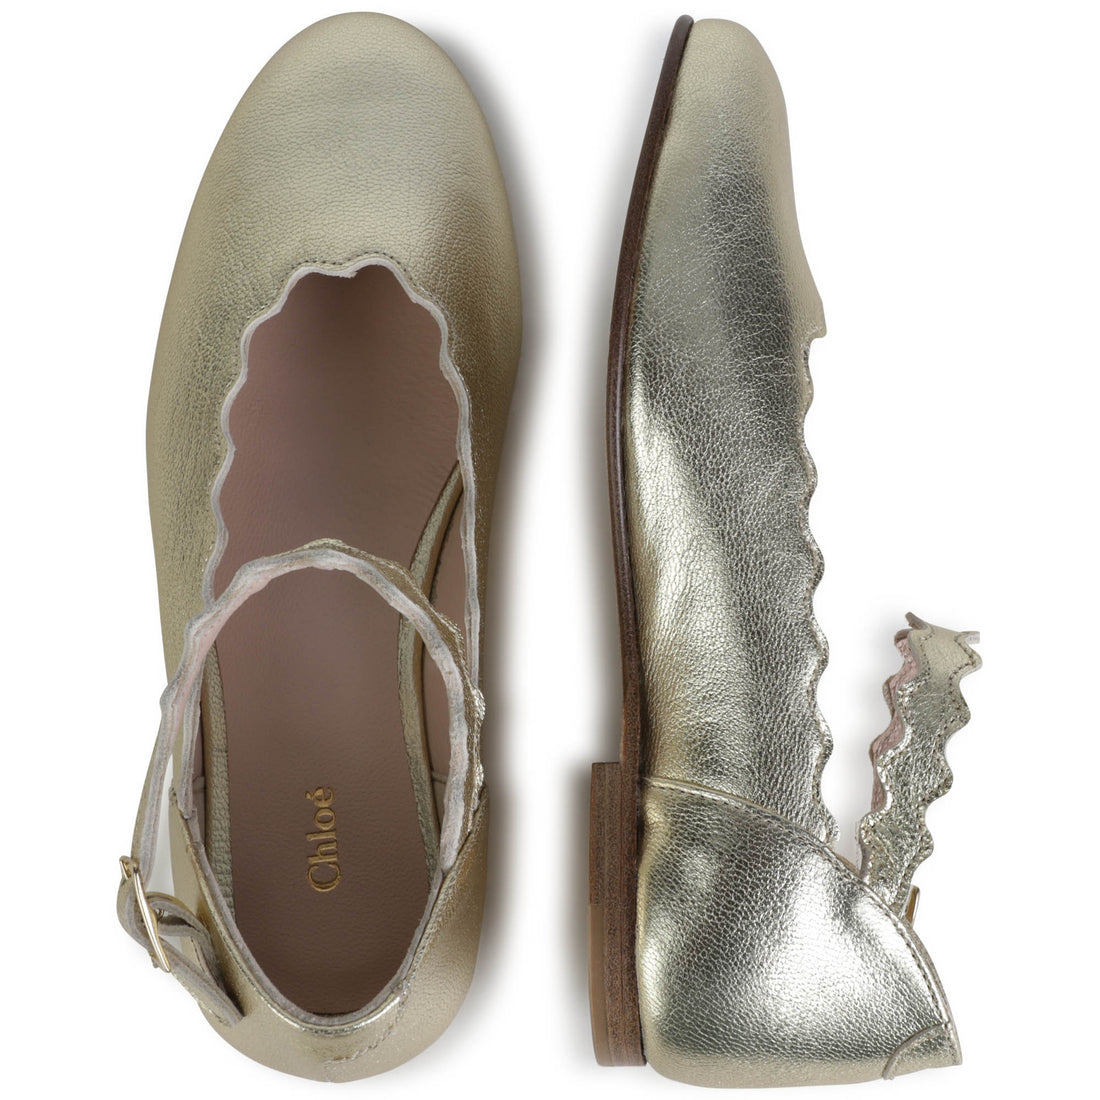 Chloe Ballerina Shoes Style: C19170